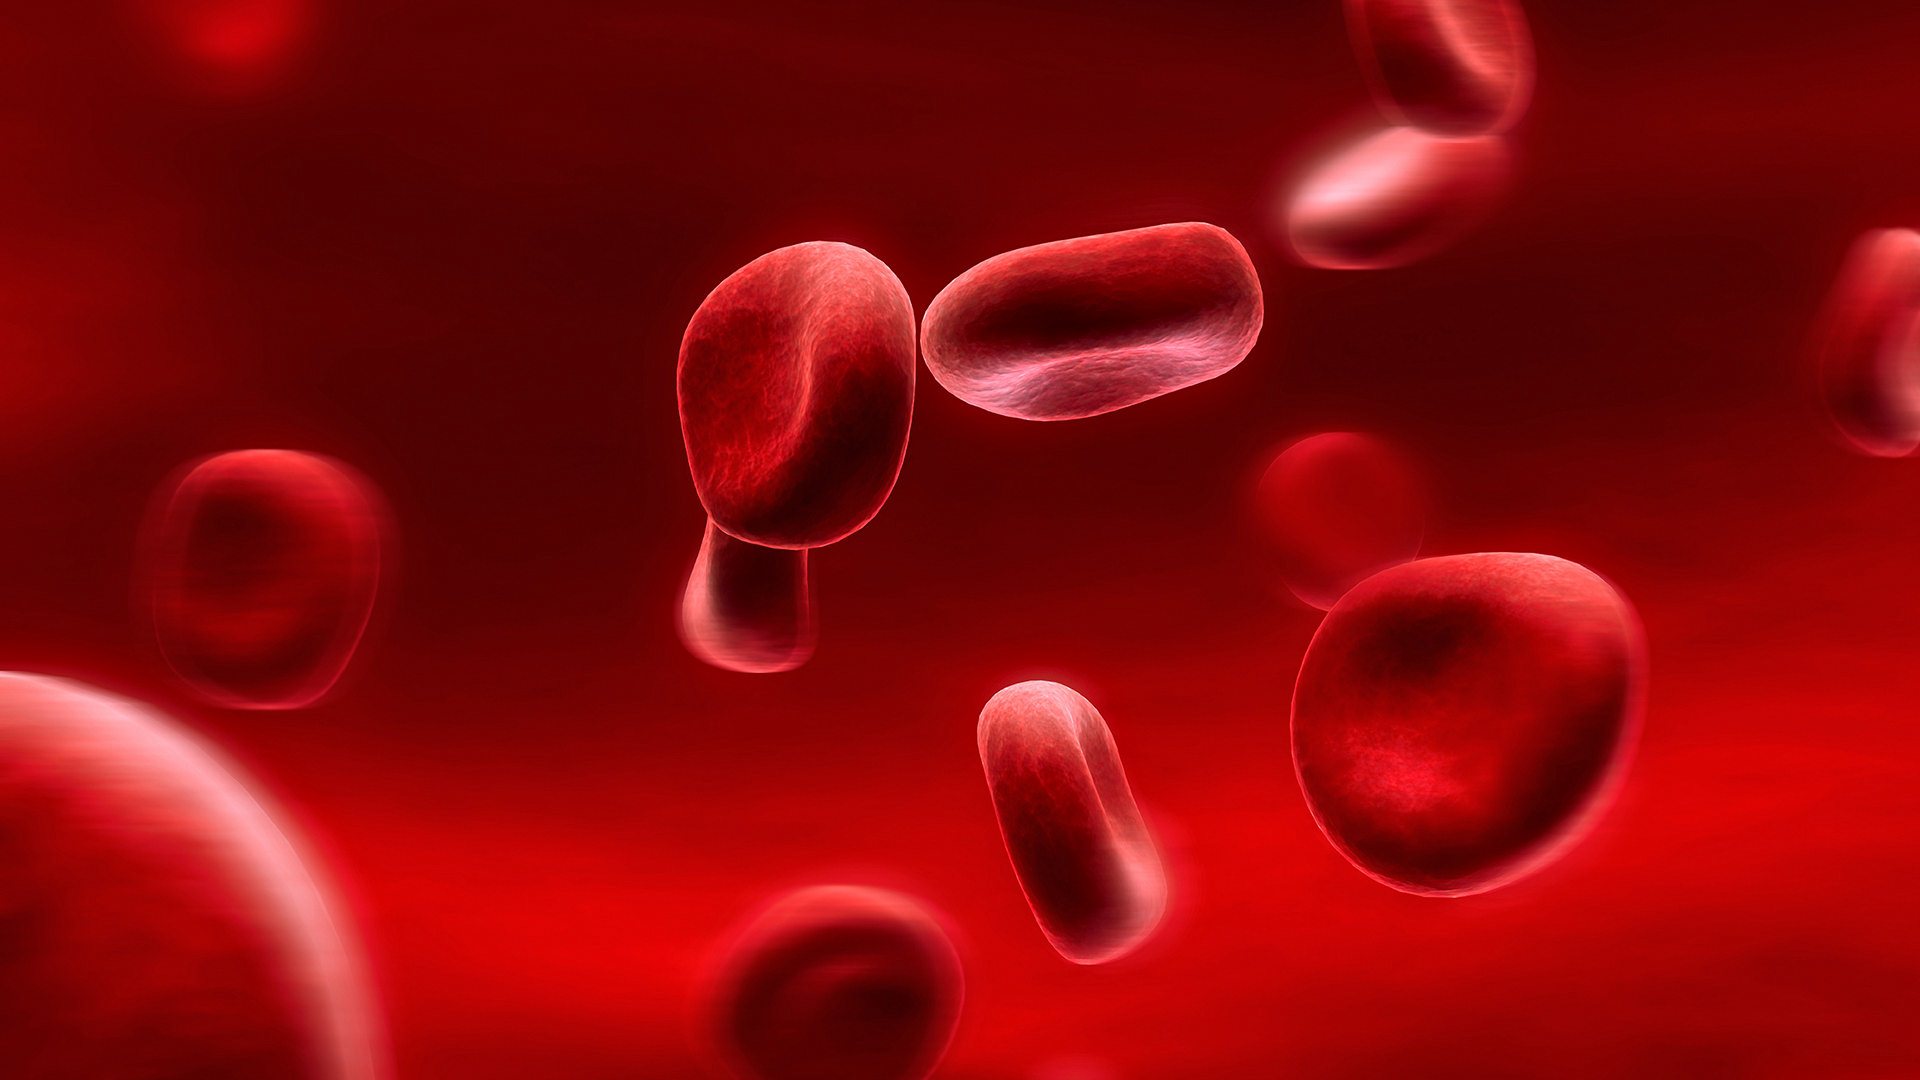 red_blood_cells-wallpaper.jpg